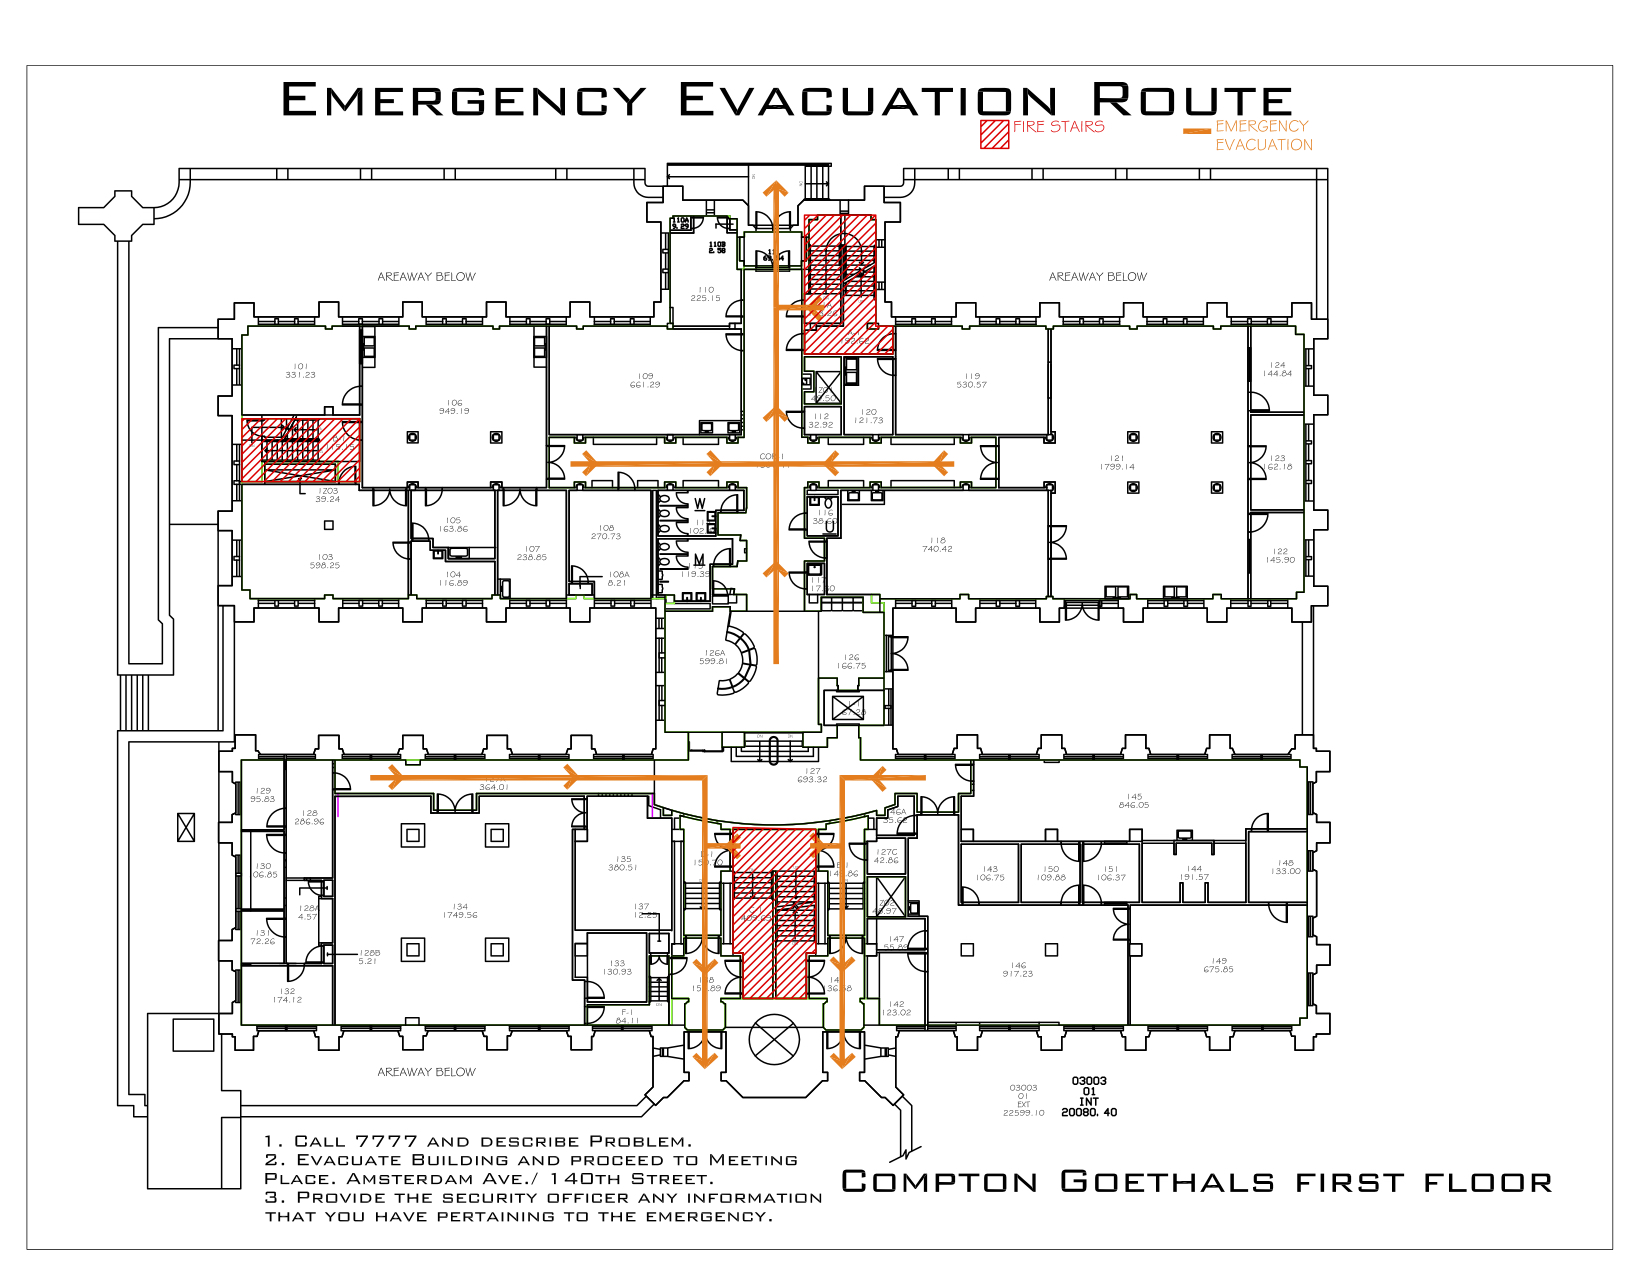 Compton Goethals Hall - Evacuation Routes 4